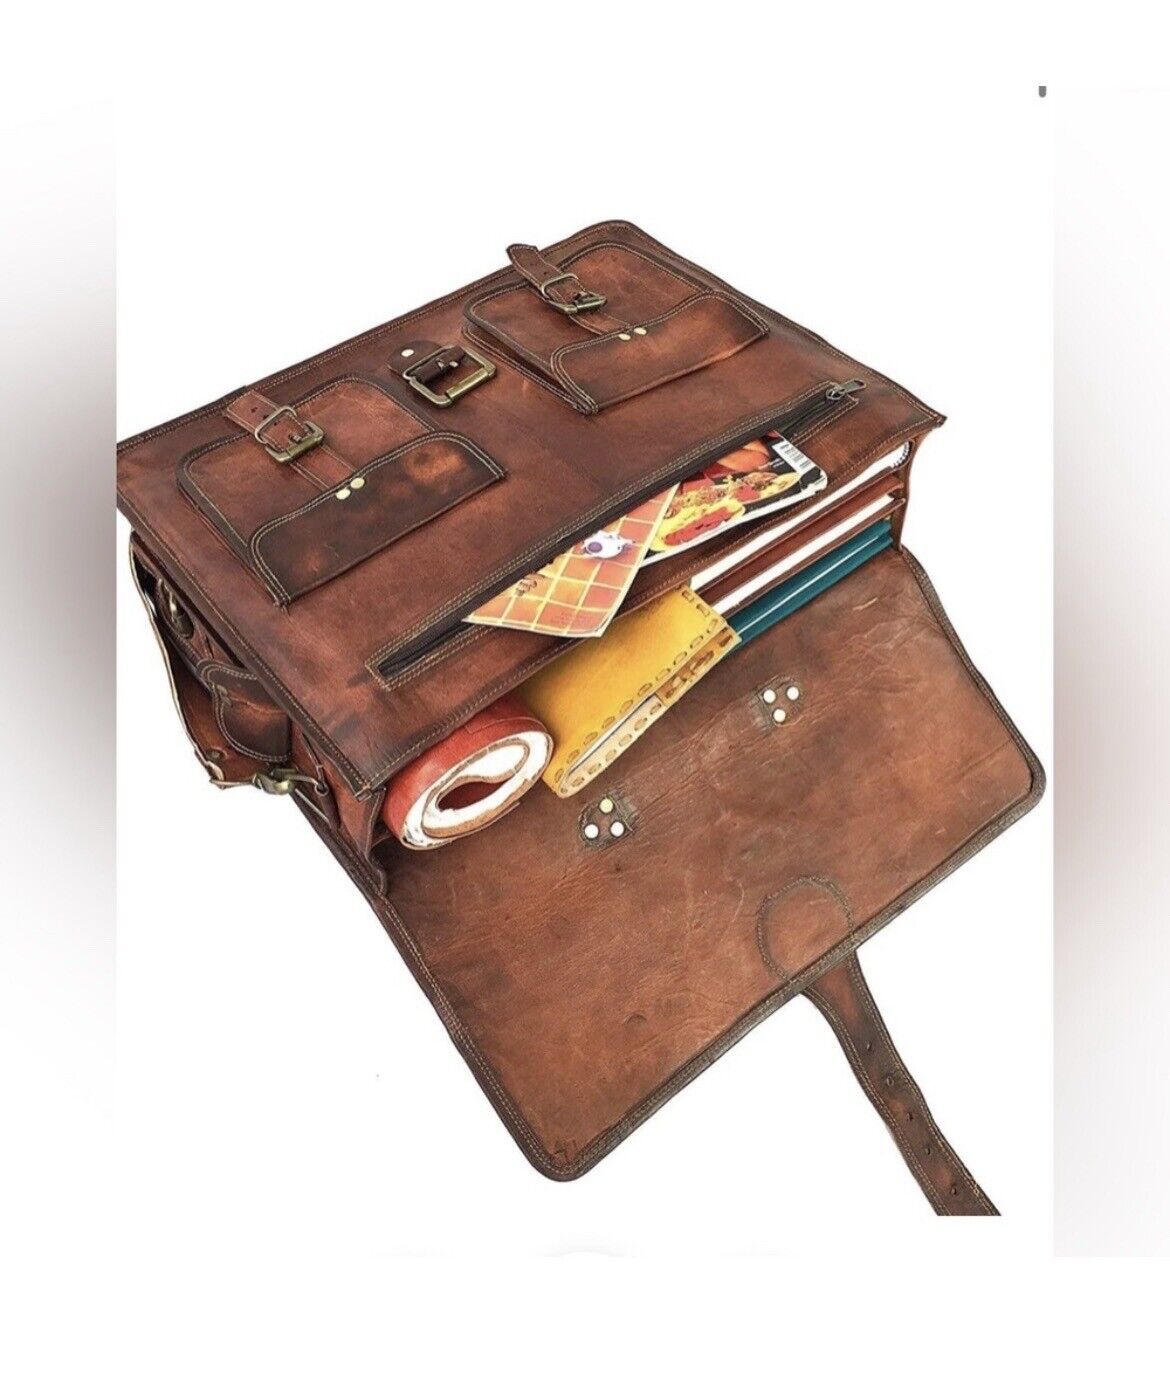 Cuero Vintage Handmade Leather Messenger Bag - image 2